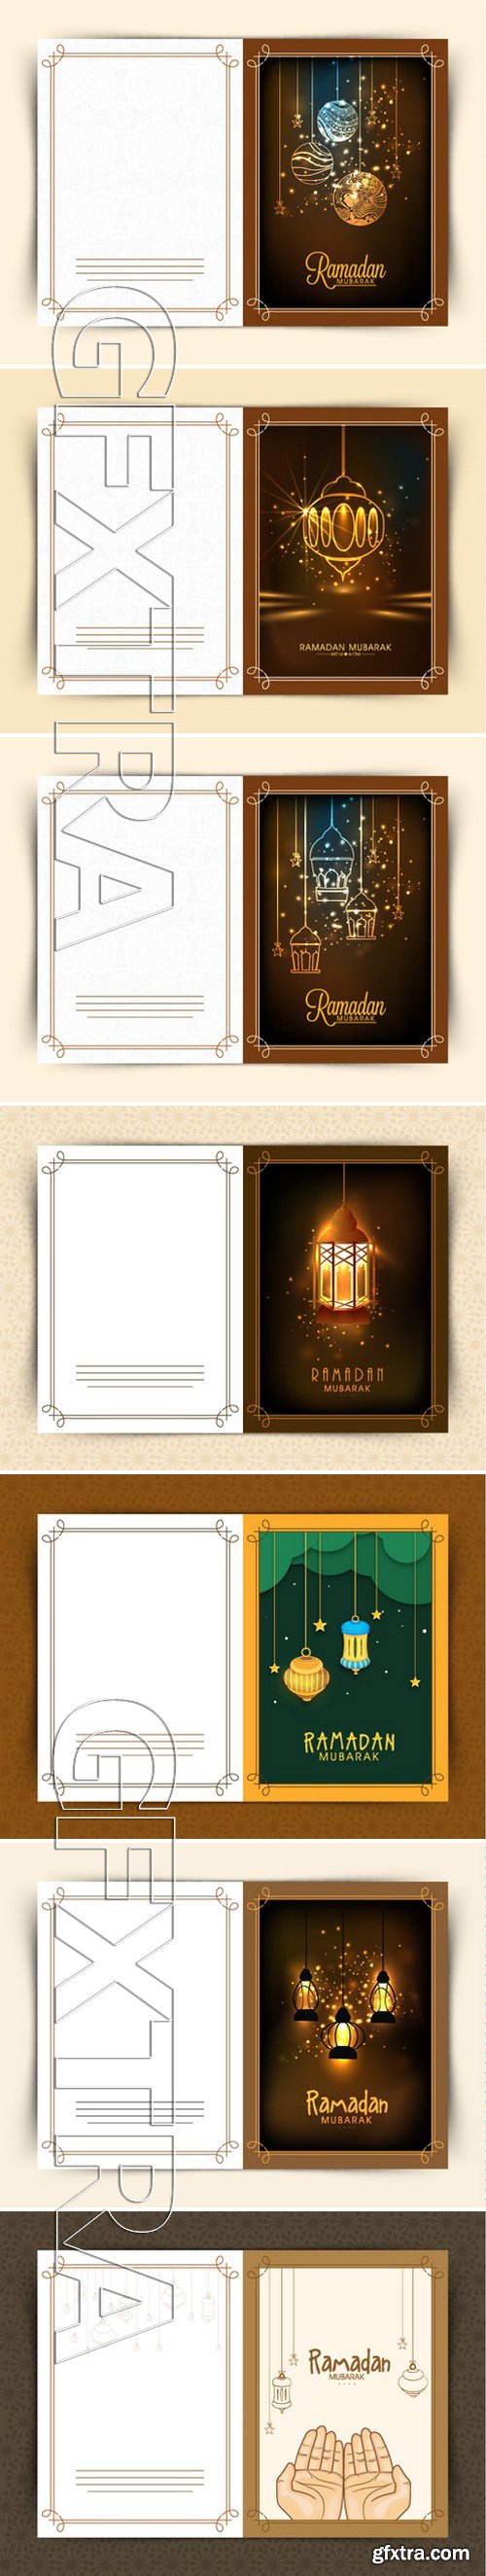 Stock Vectors - Beautiful greeting card design for Islamic holy month of prayers, Ramadan Kareem celebrations with hanging golden lanterns